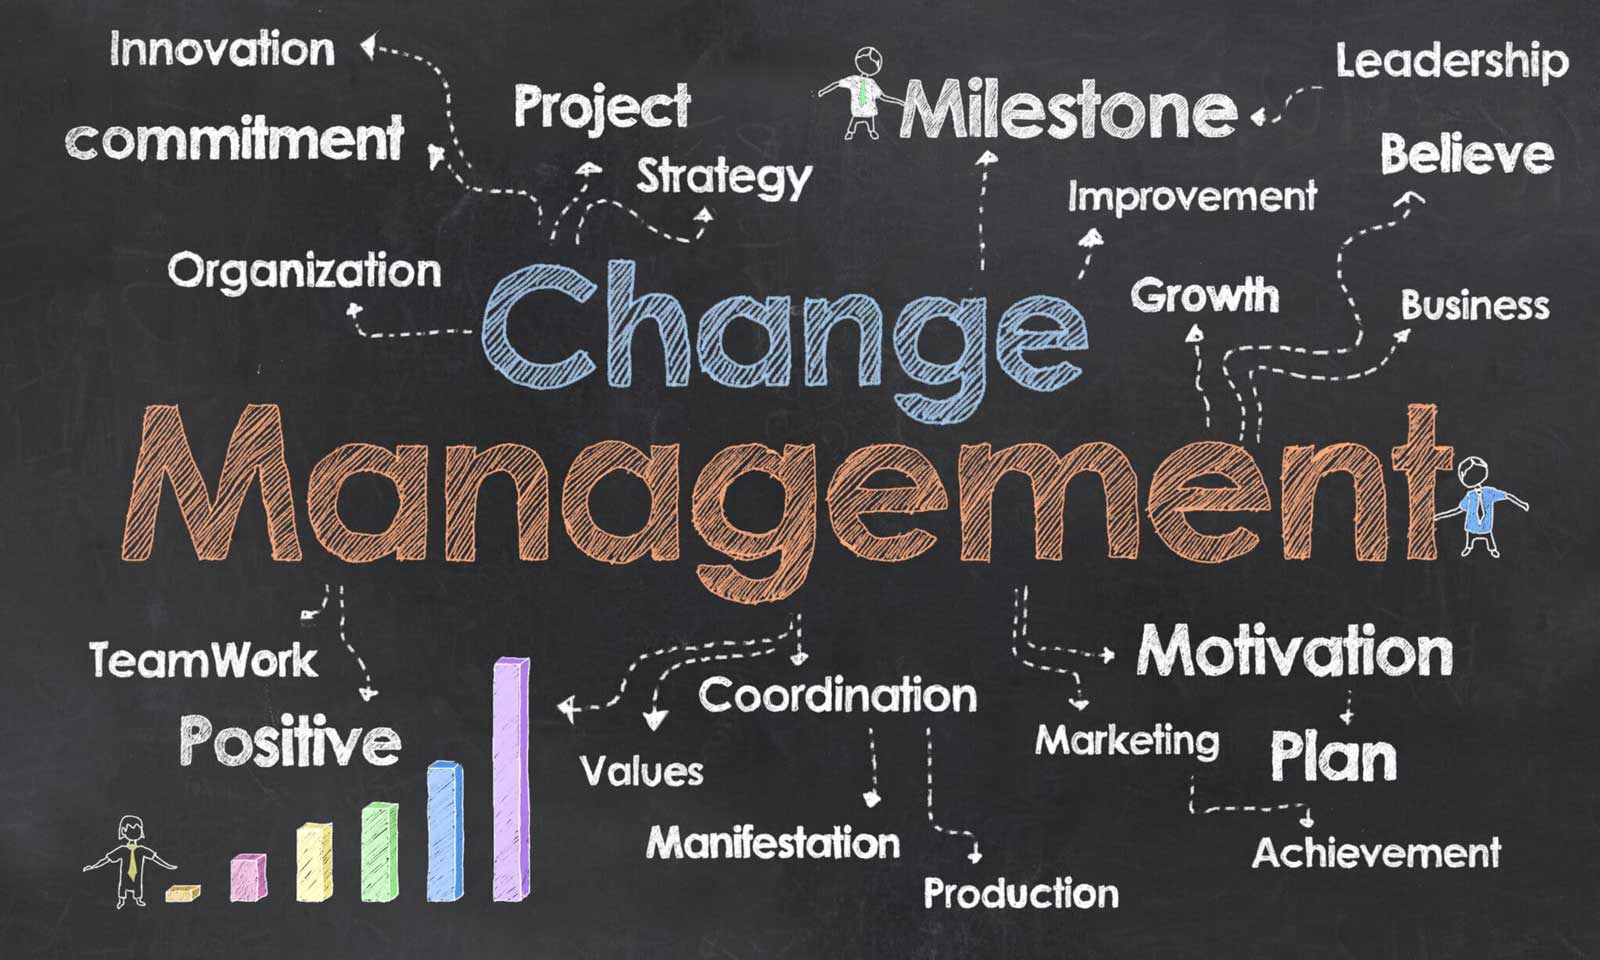 Change Management Blackboard